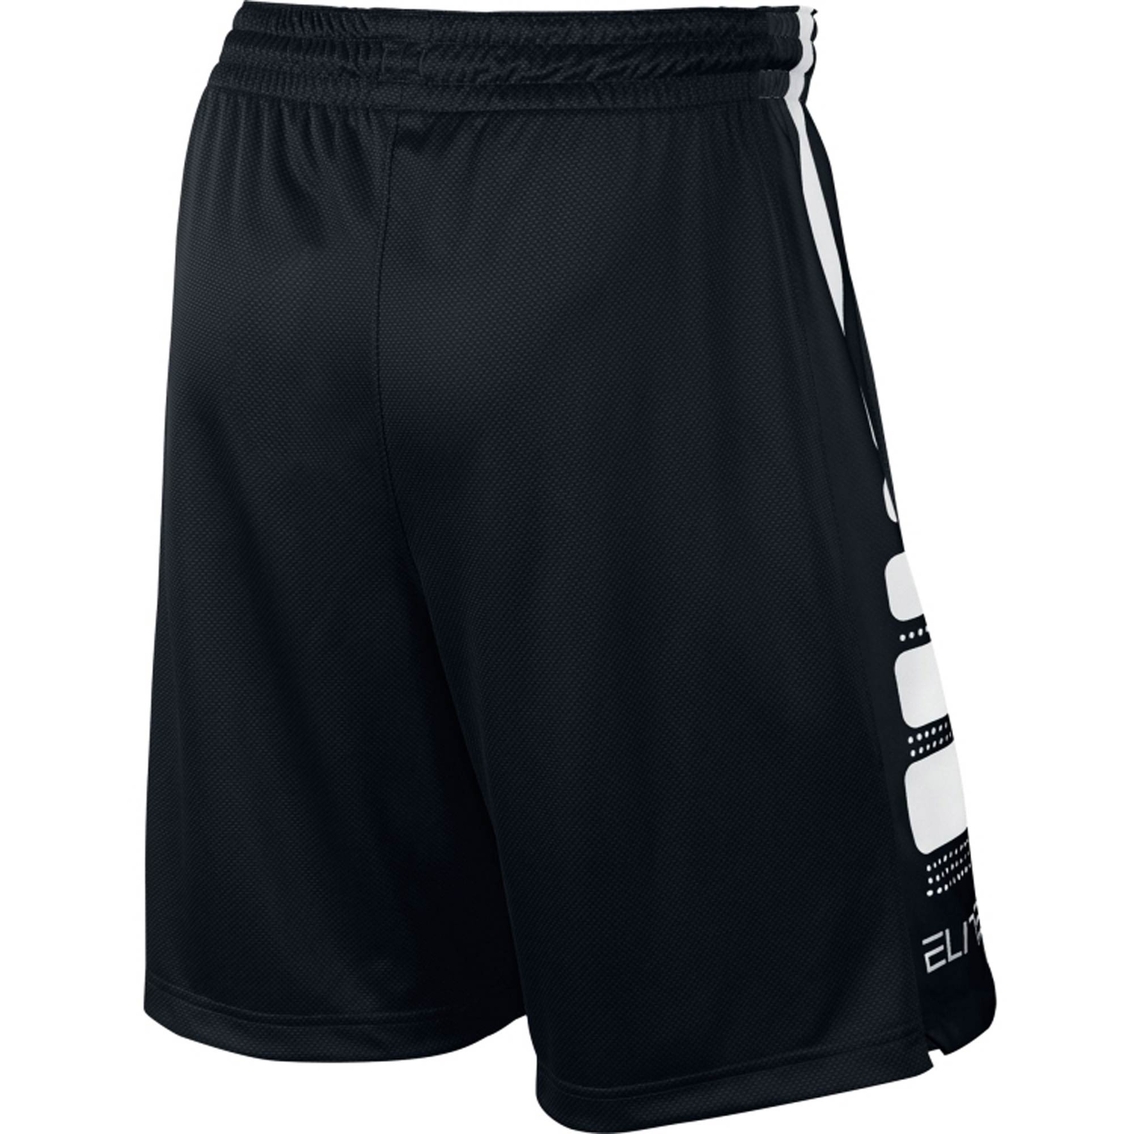 Nike Elite Stripe Shorts | Shorts | Clothing & Accessories | Shop The ...